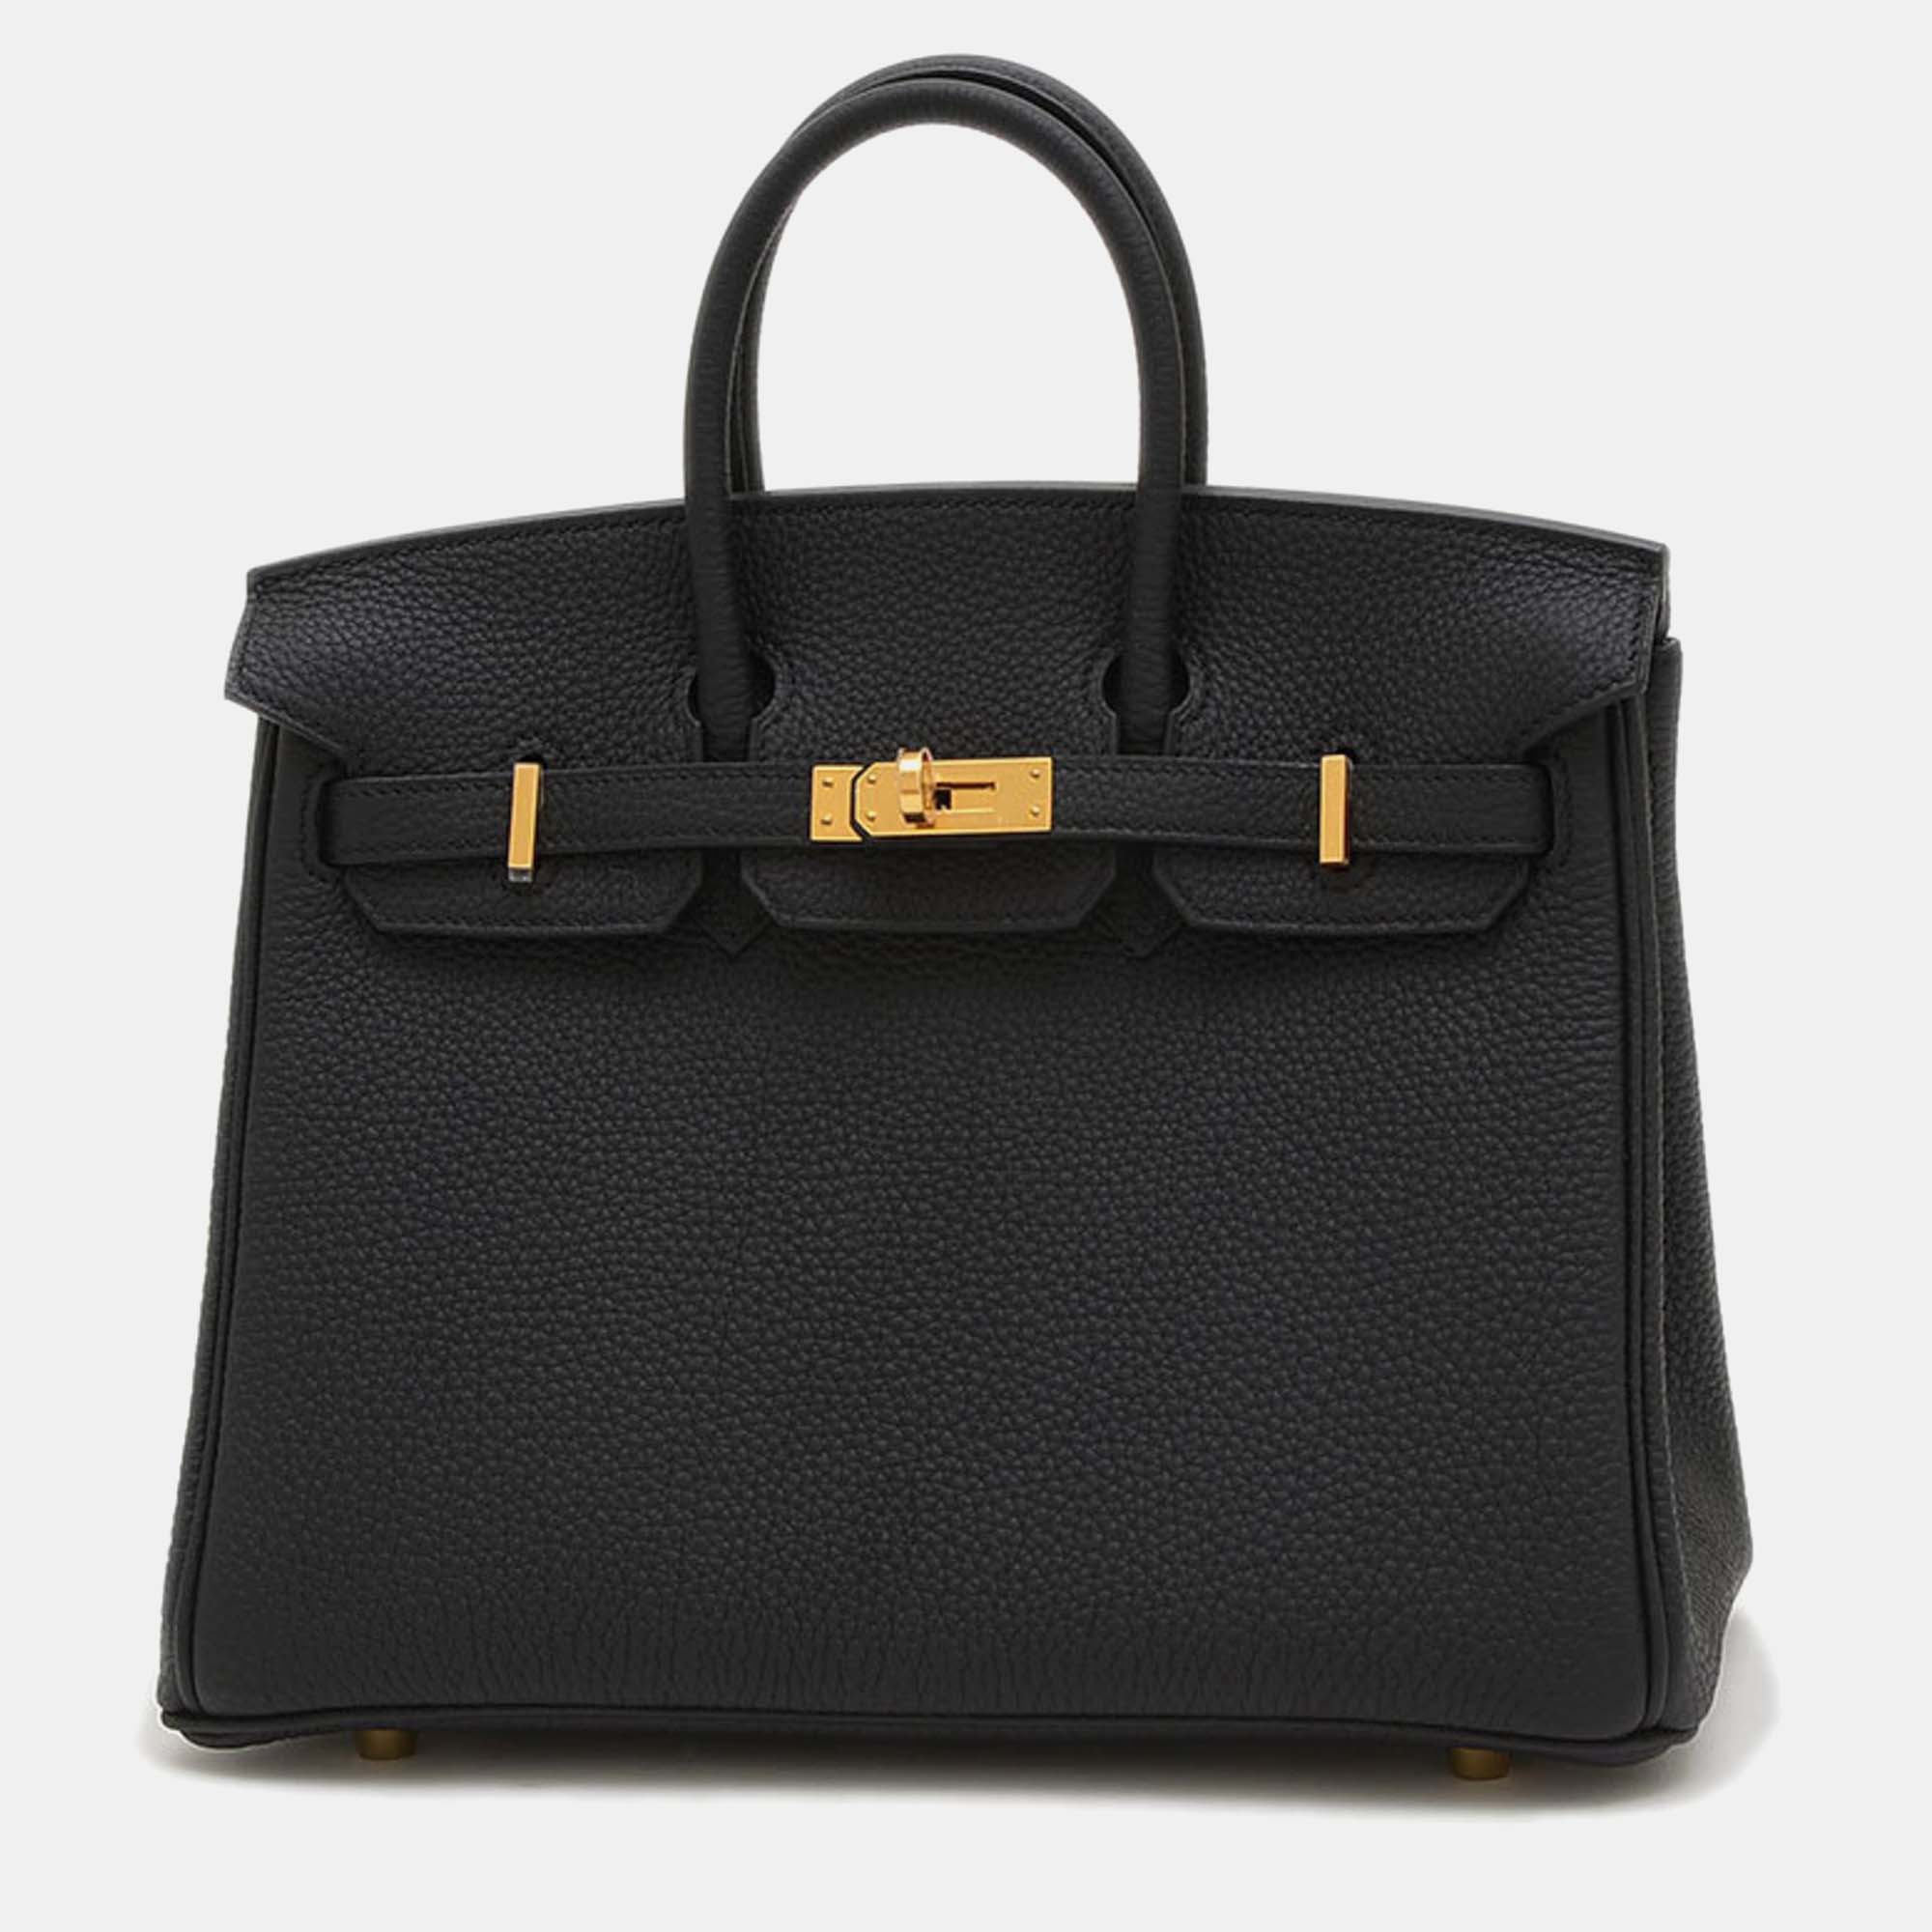 Hermes black togo birkin handbag